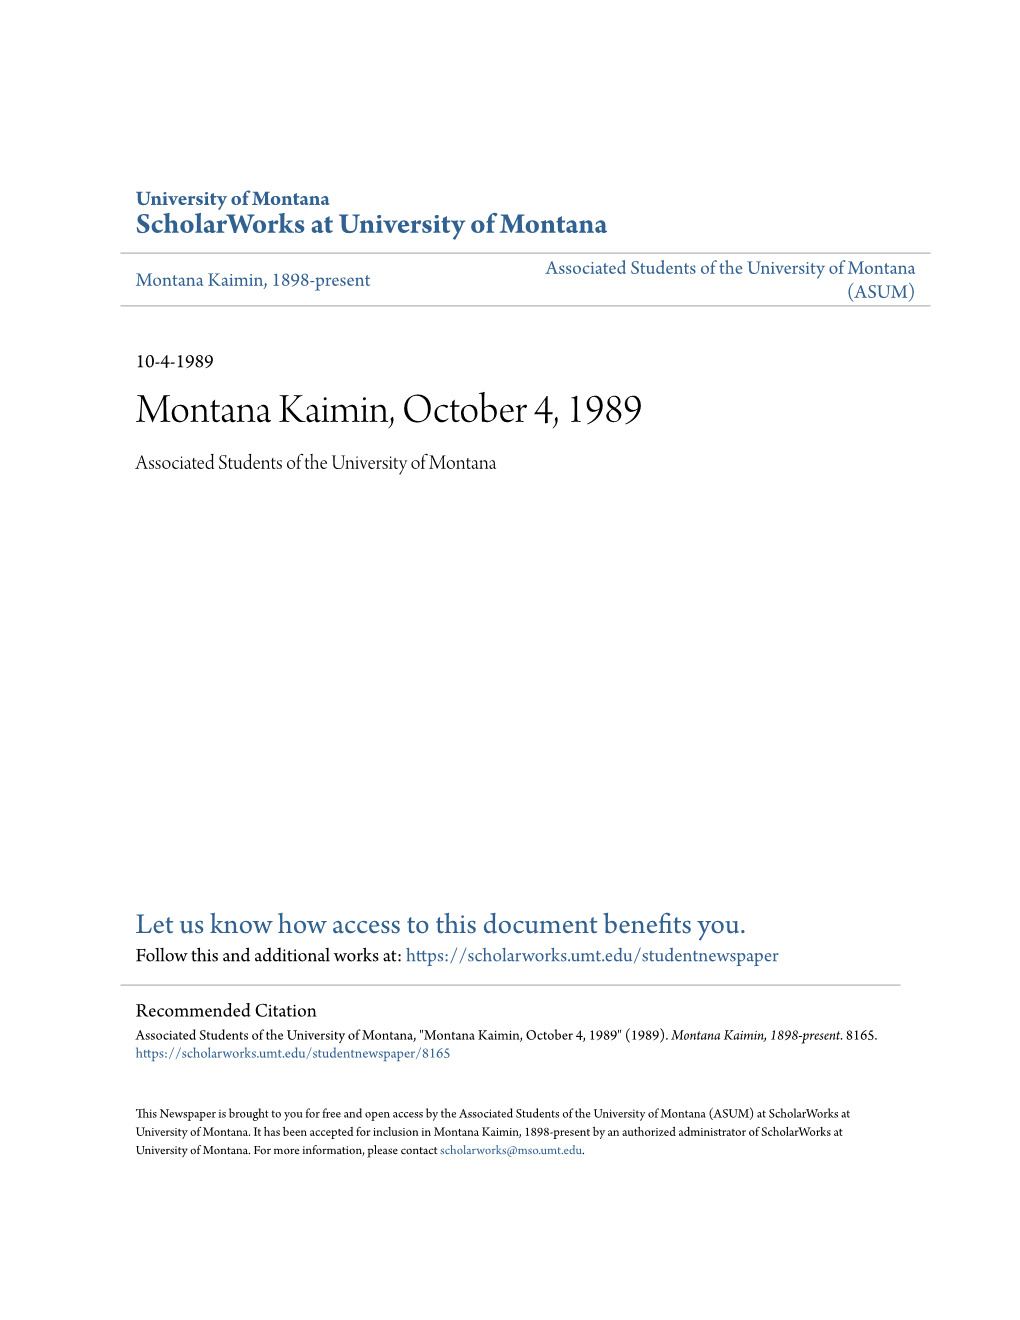 Montana Kaimin, October 4, 1989 Associated Students of the University of Montana